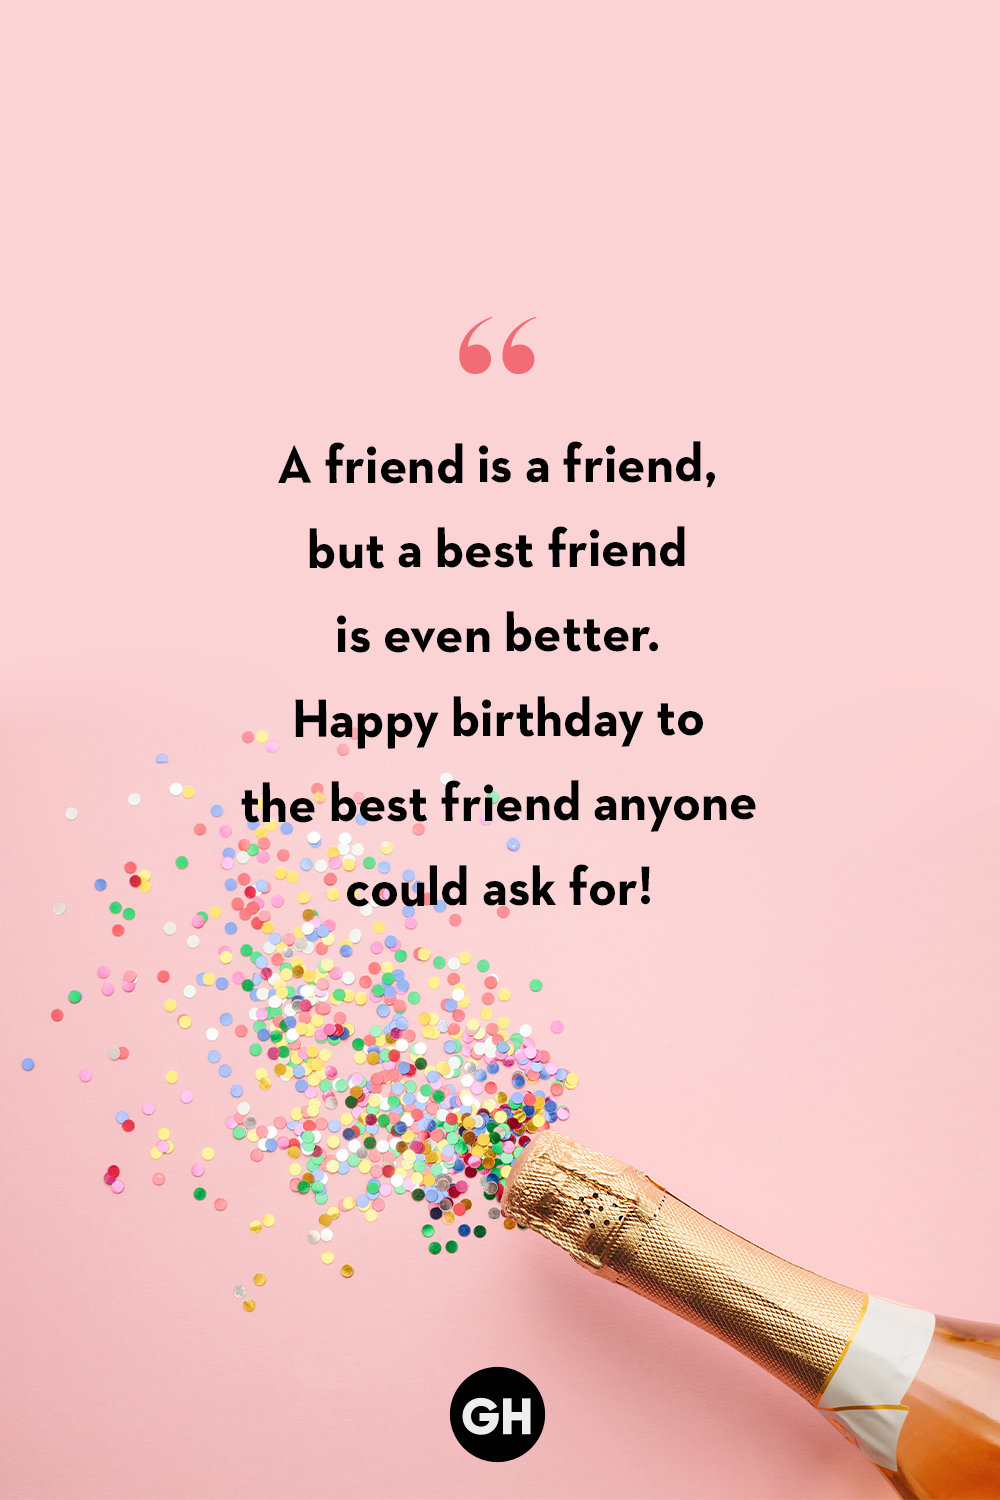 Cutest birthday wishes for best friend